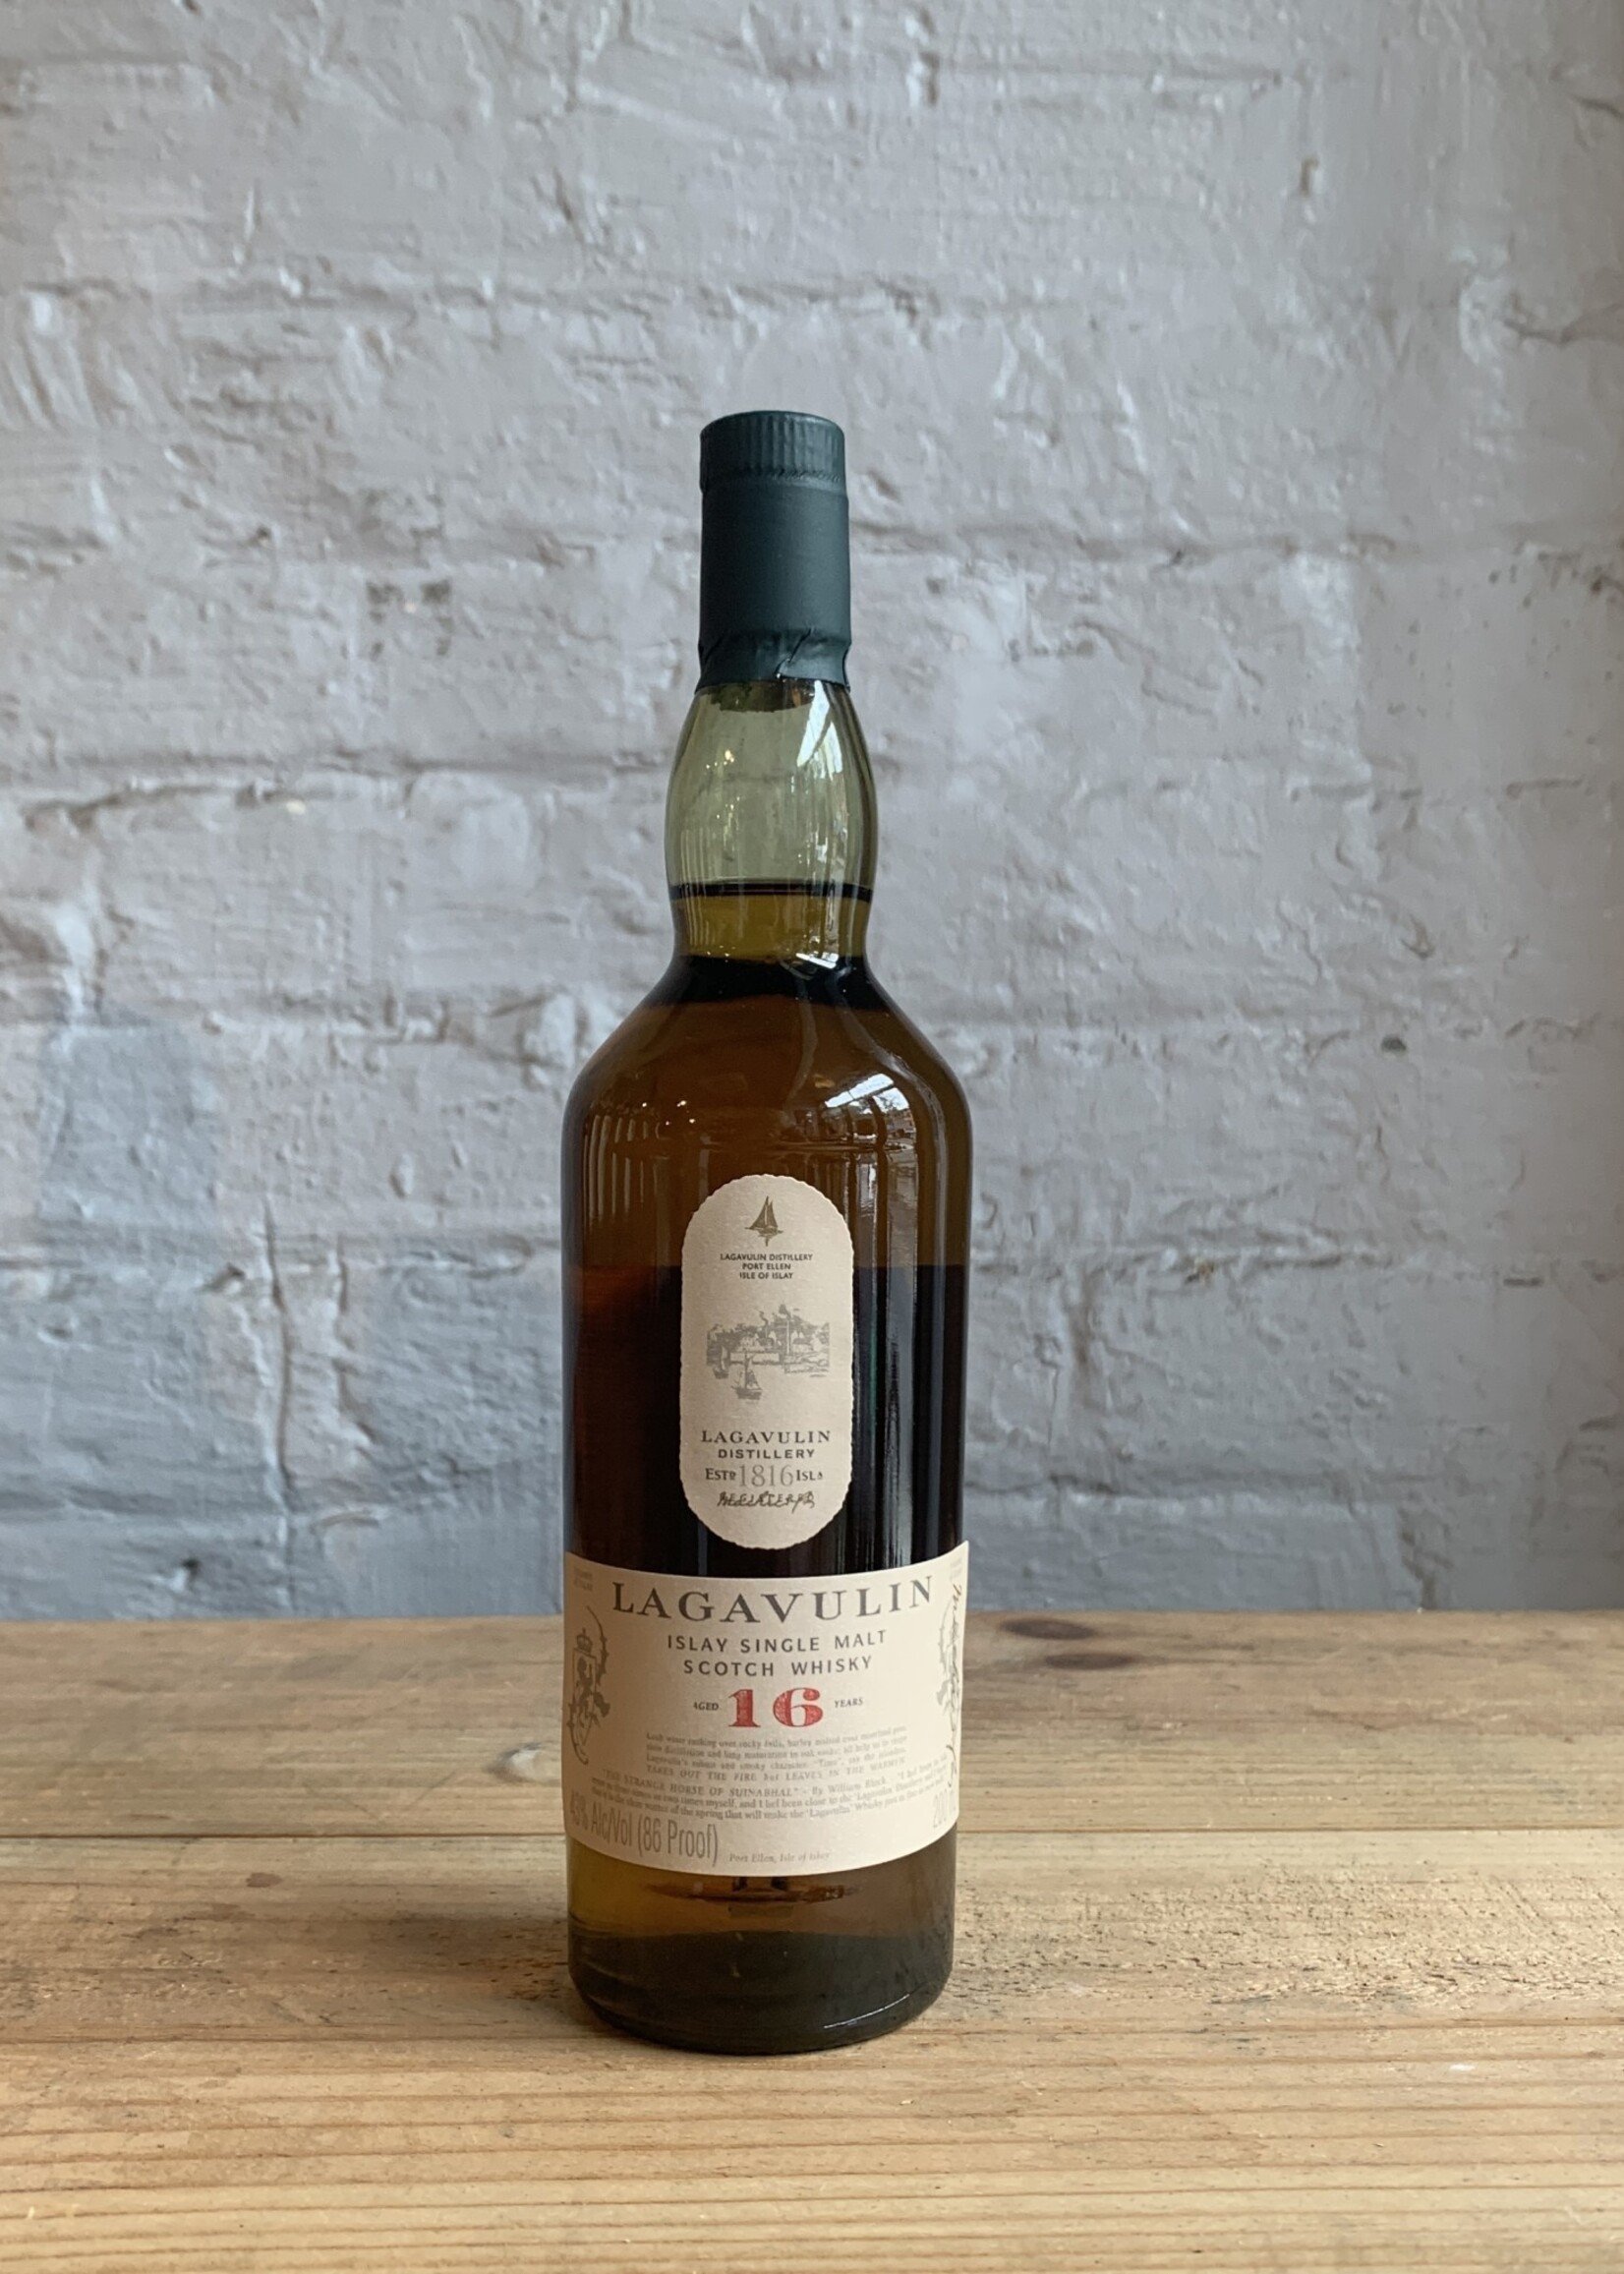 Lagavulin 16yr Single Malt Scotch Whisky - Islay, Scotland (200ml)